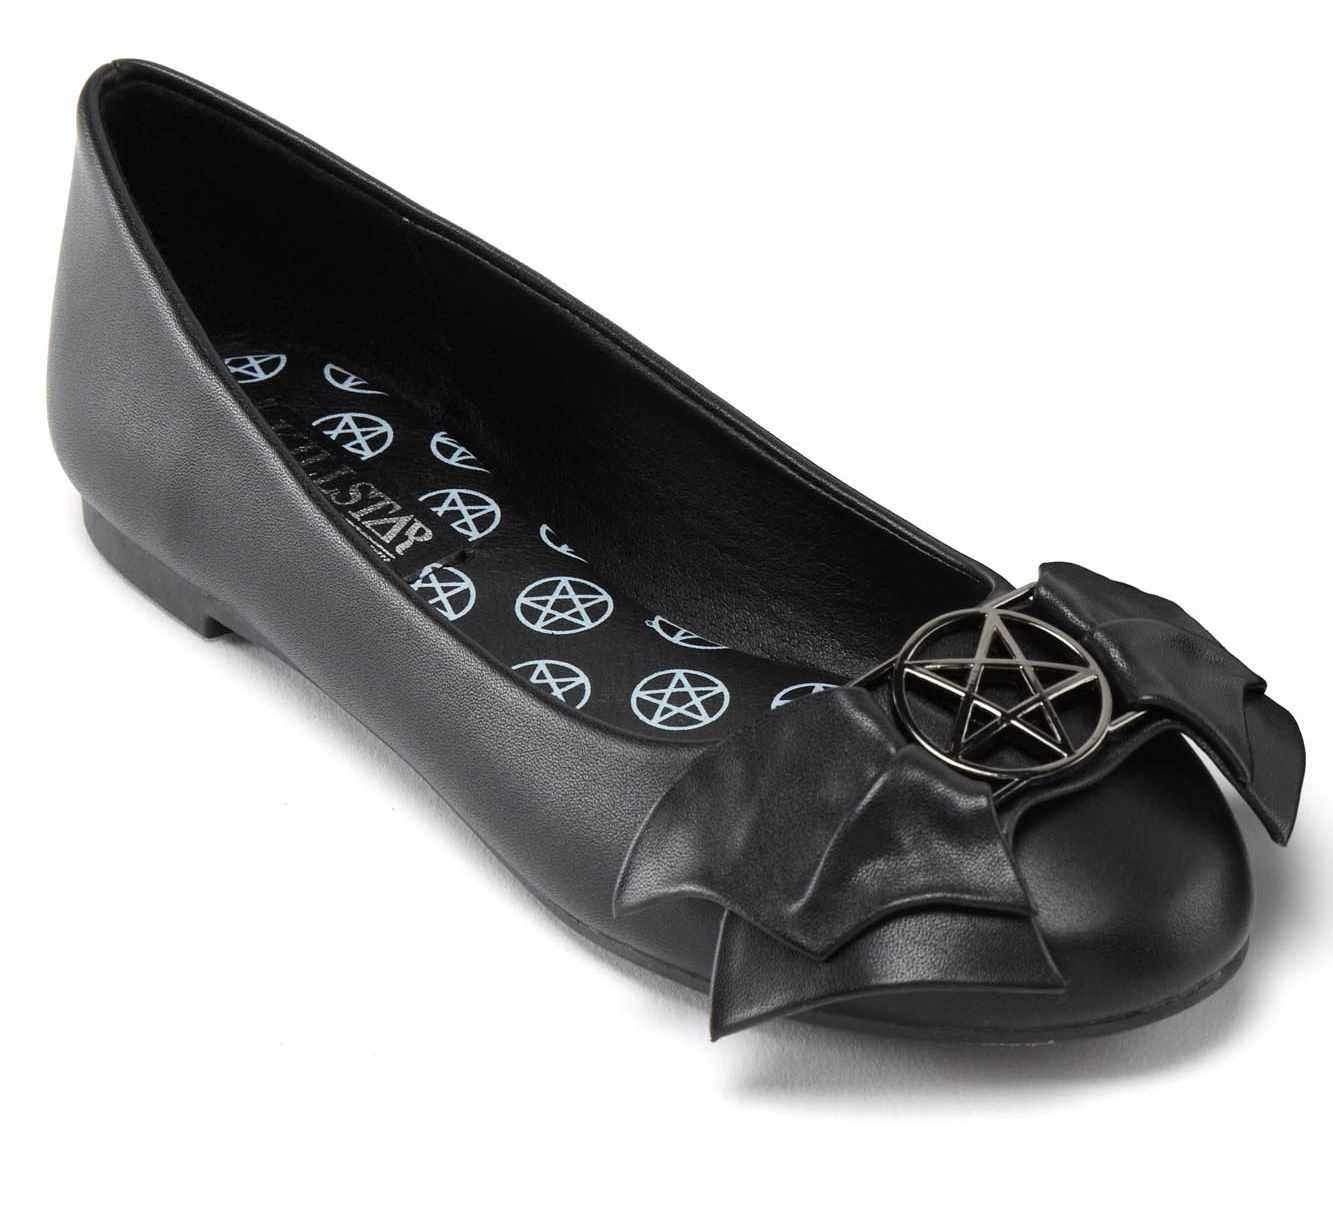 ks2196_chaussures-ballerines-gothique-glam-rock-evilyn